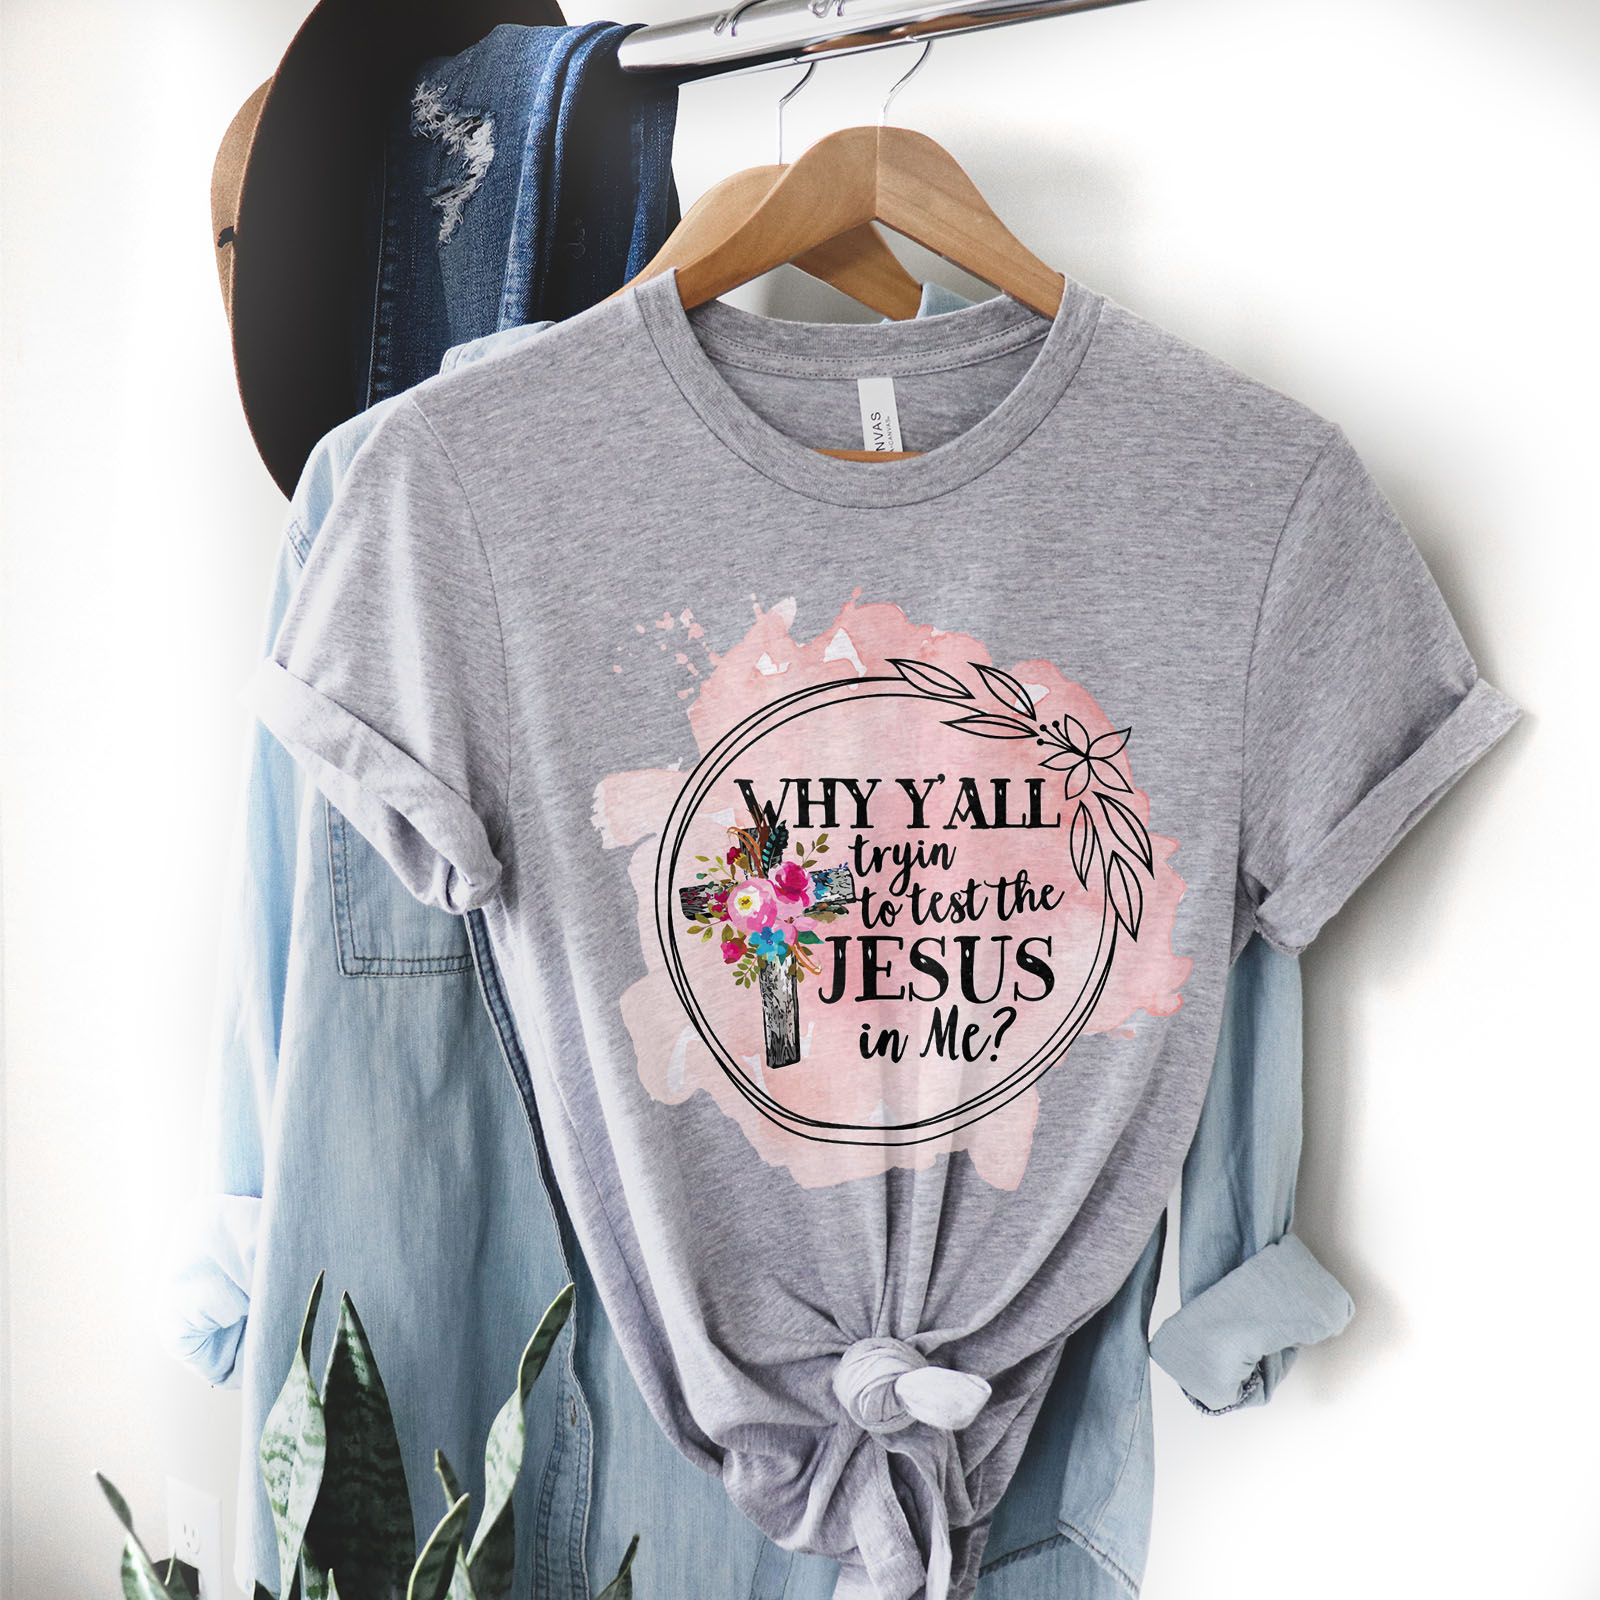 Why Ya'll Tryin Tee Shirts For Women - Christian Shirts for Women - Religious Tee Shirts